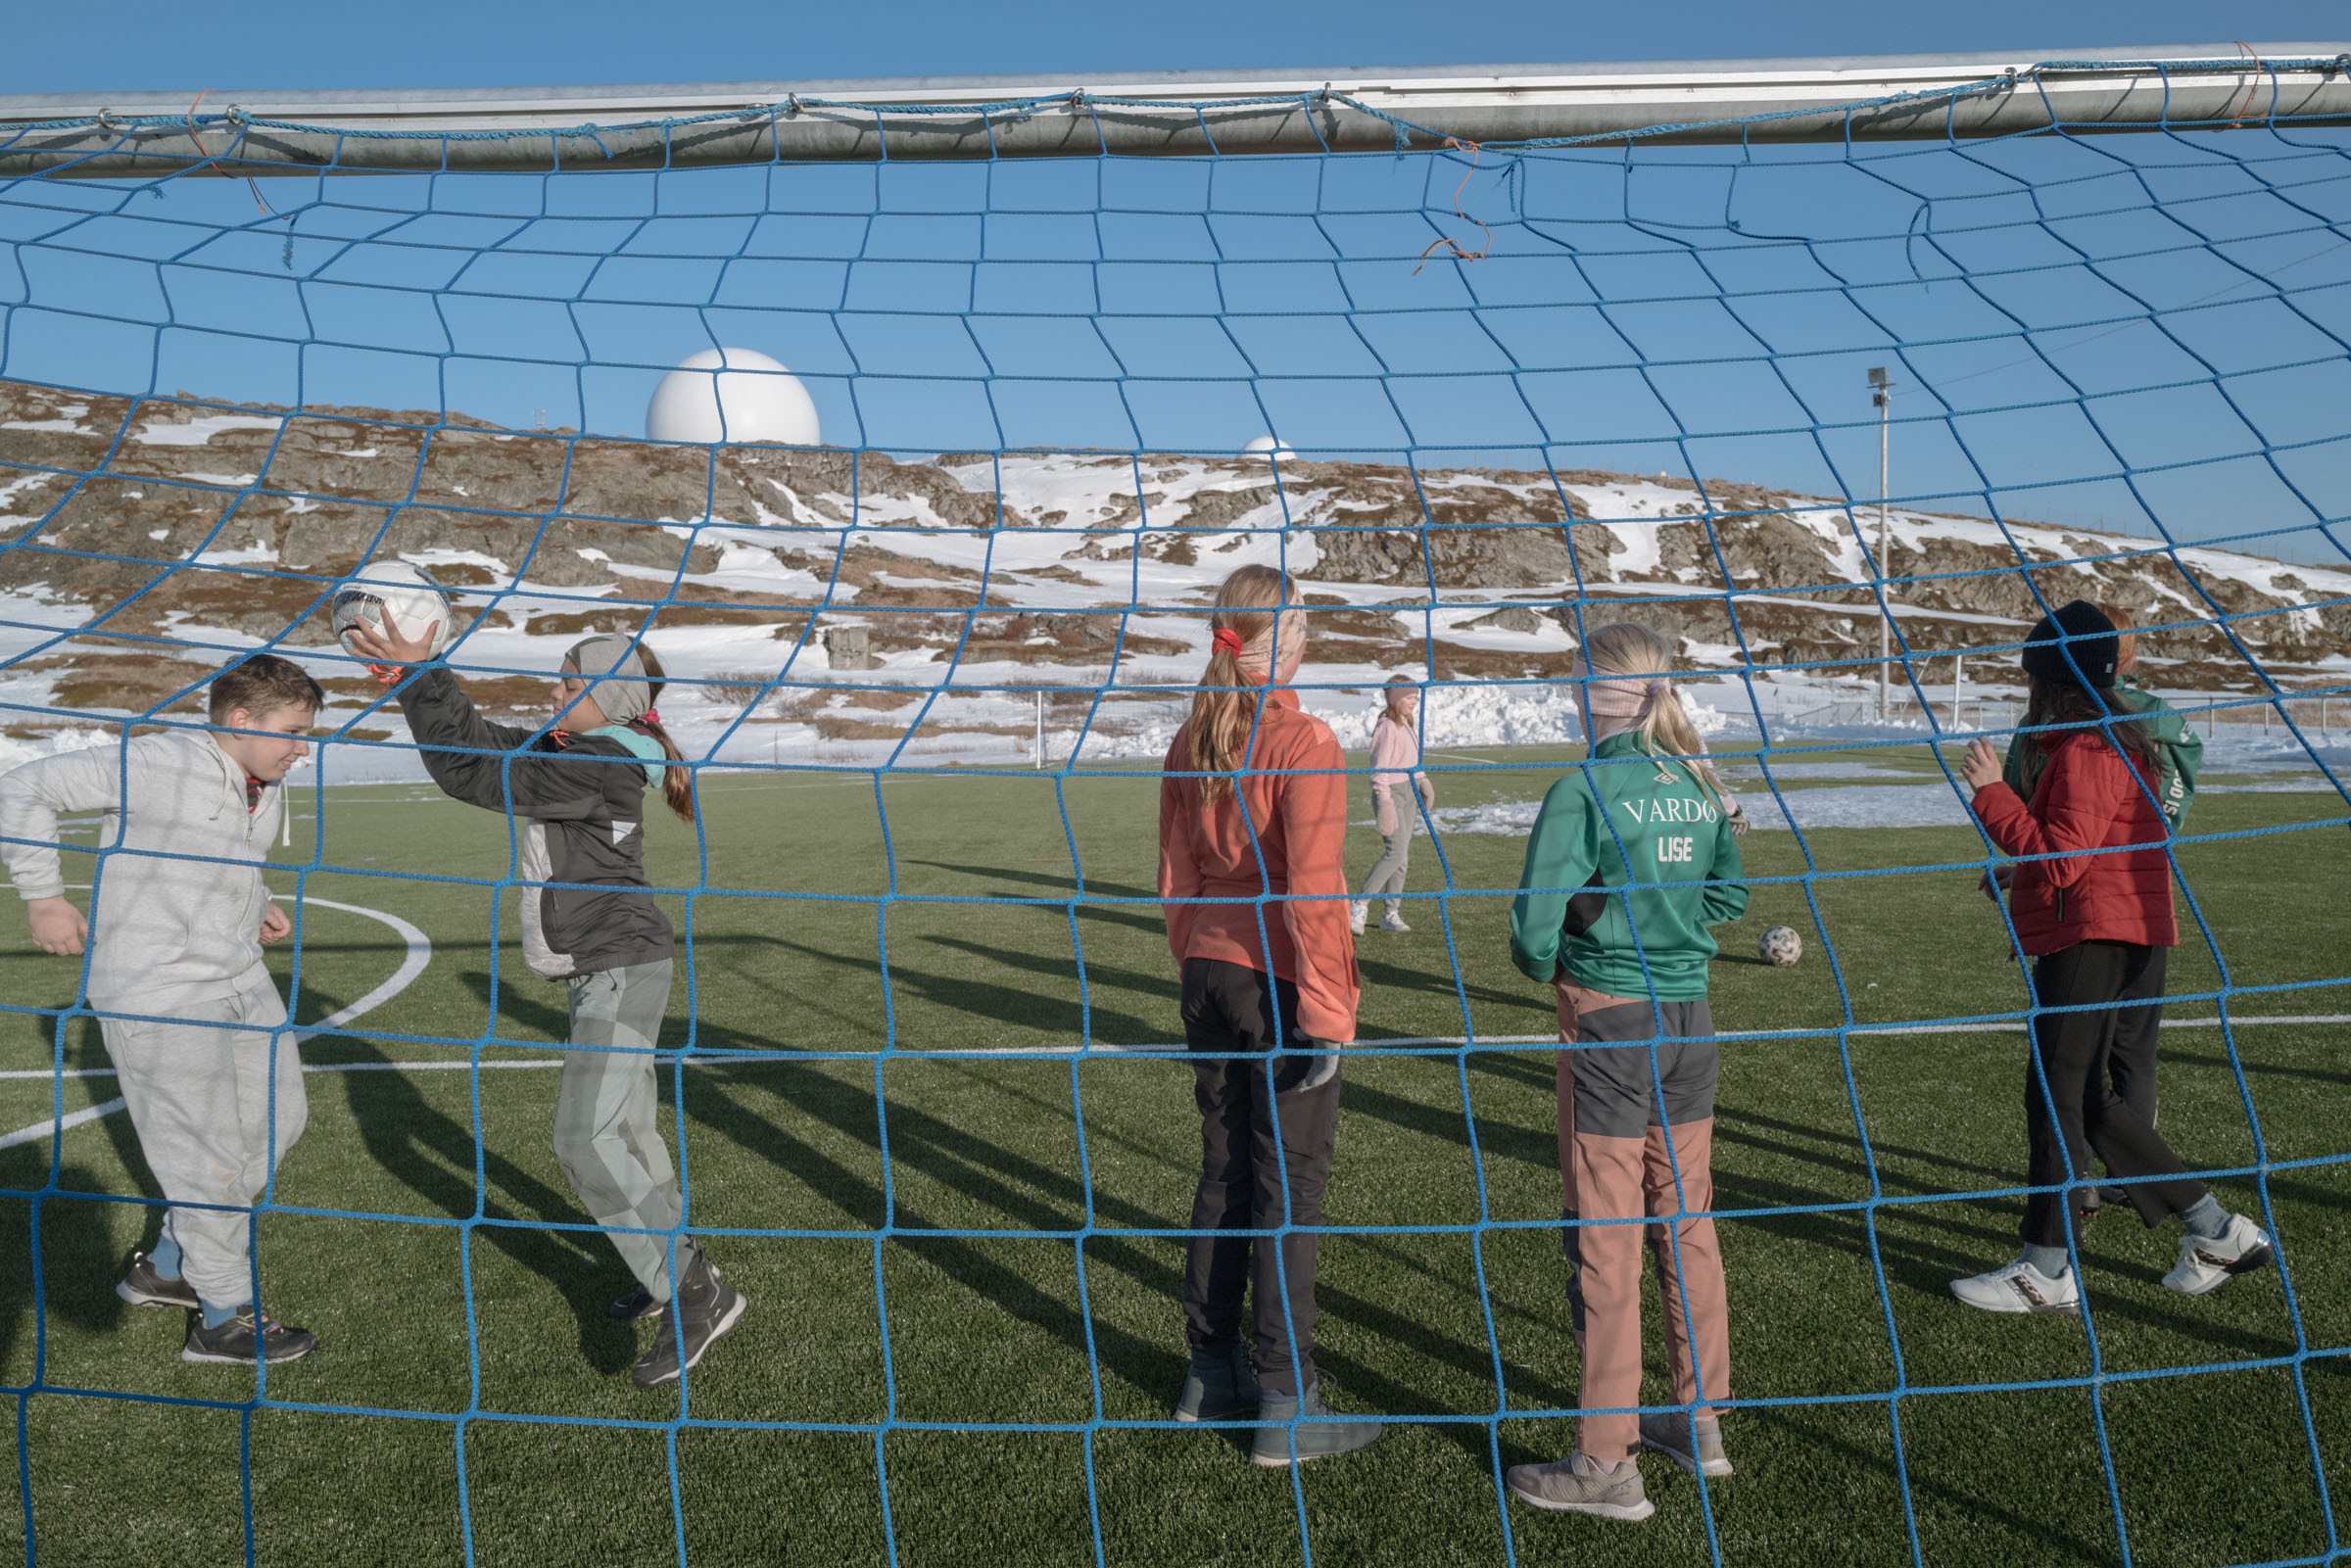 Children play soccer near the GLOBUS radar systems.